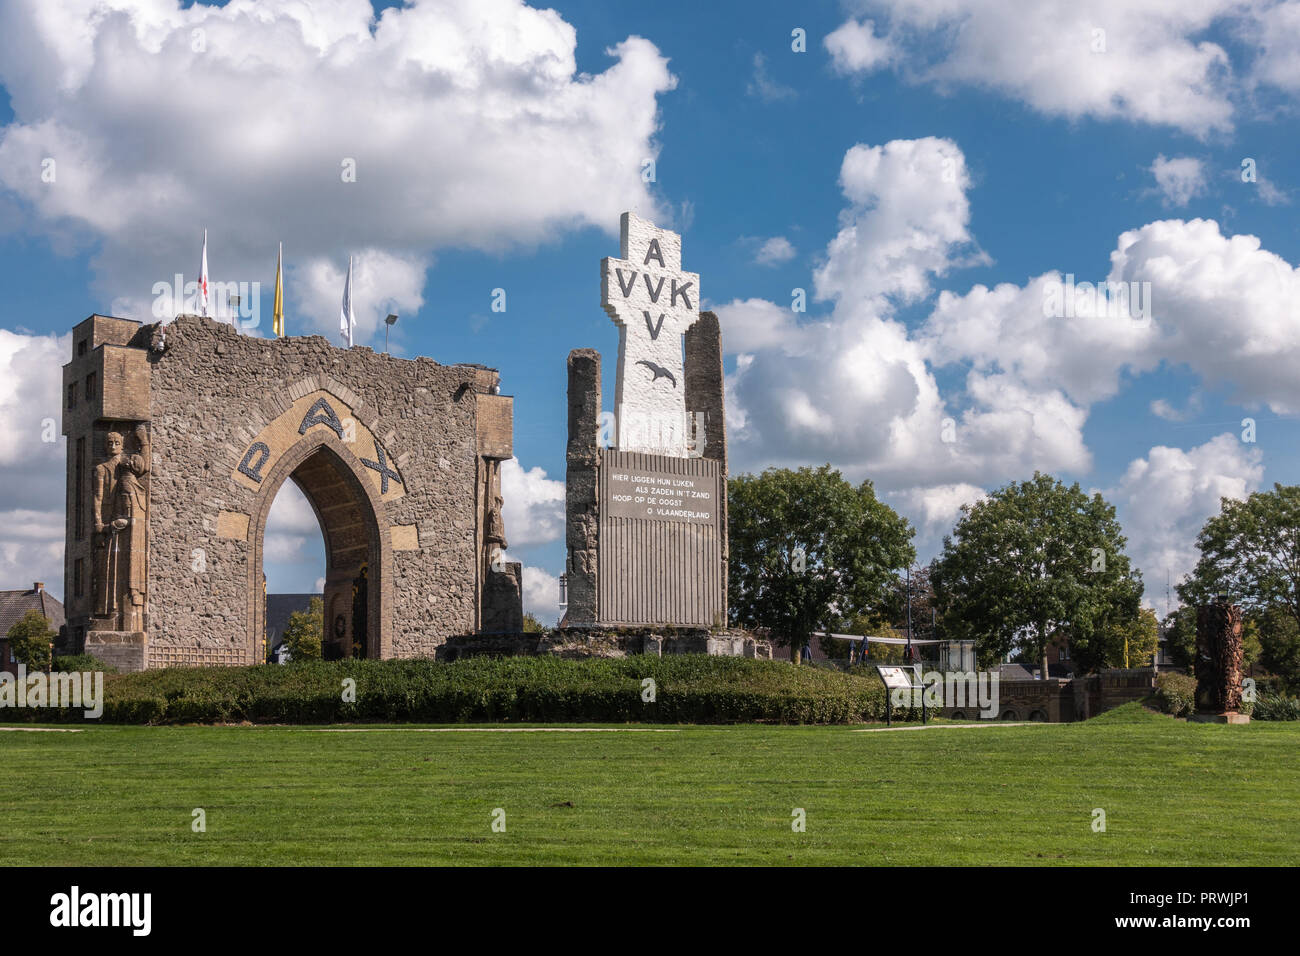 Diksmuide, Flanders, Belgium - September 15, 2018: PAX Gate and crypt ruin at IJzertoren plain. Gray and brown stones, AVV-VVK symbol on white cross,  Stock Photo